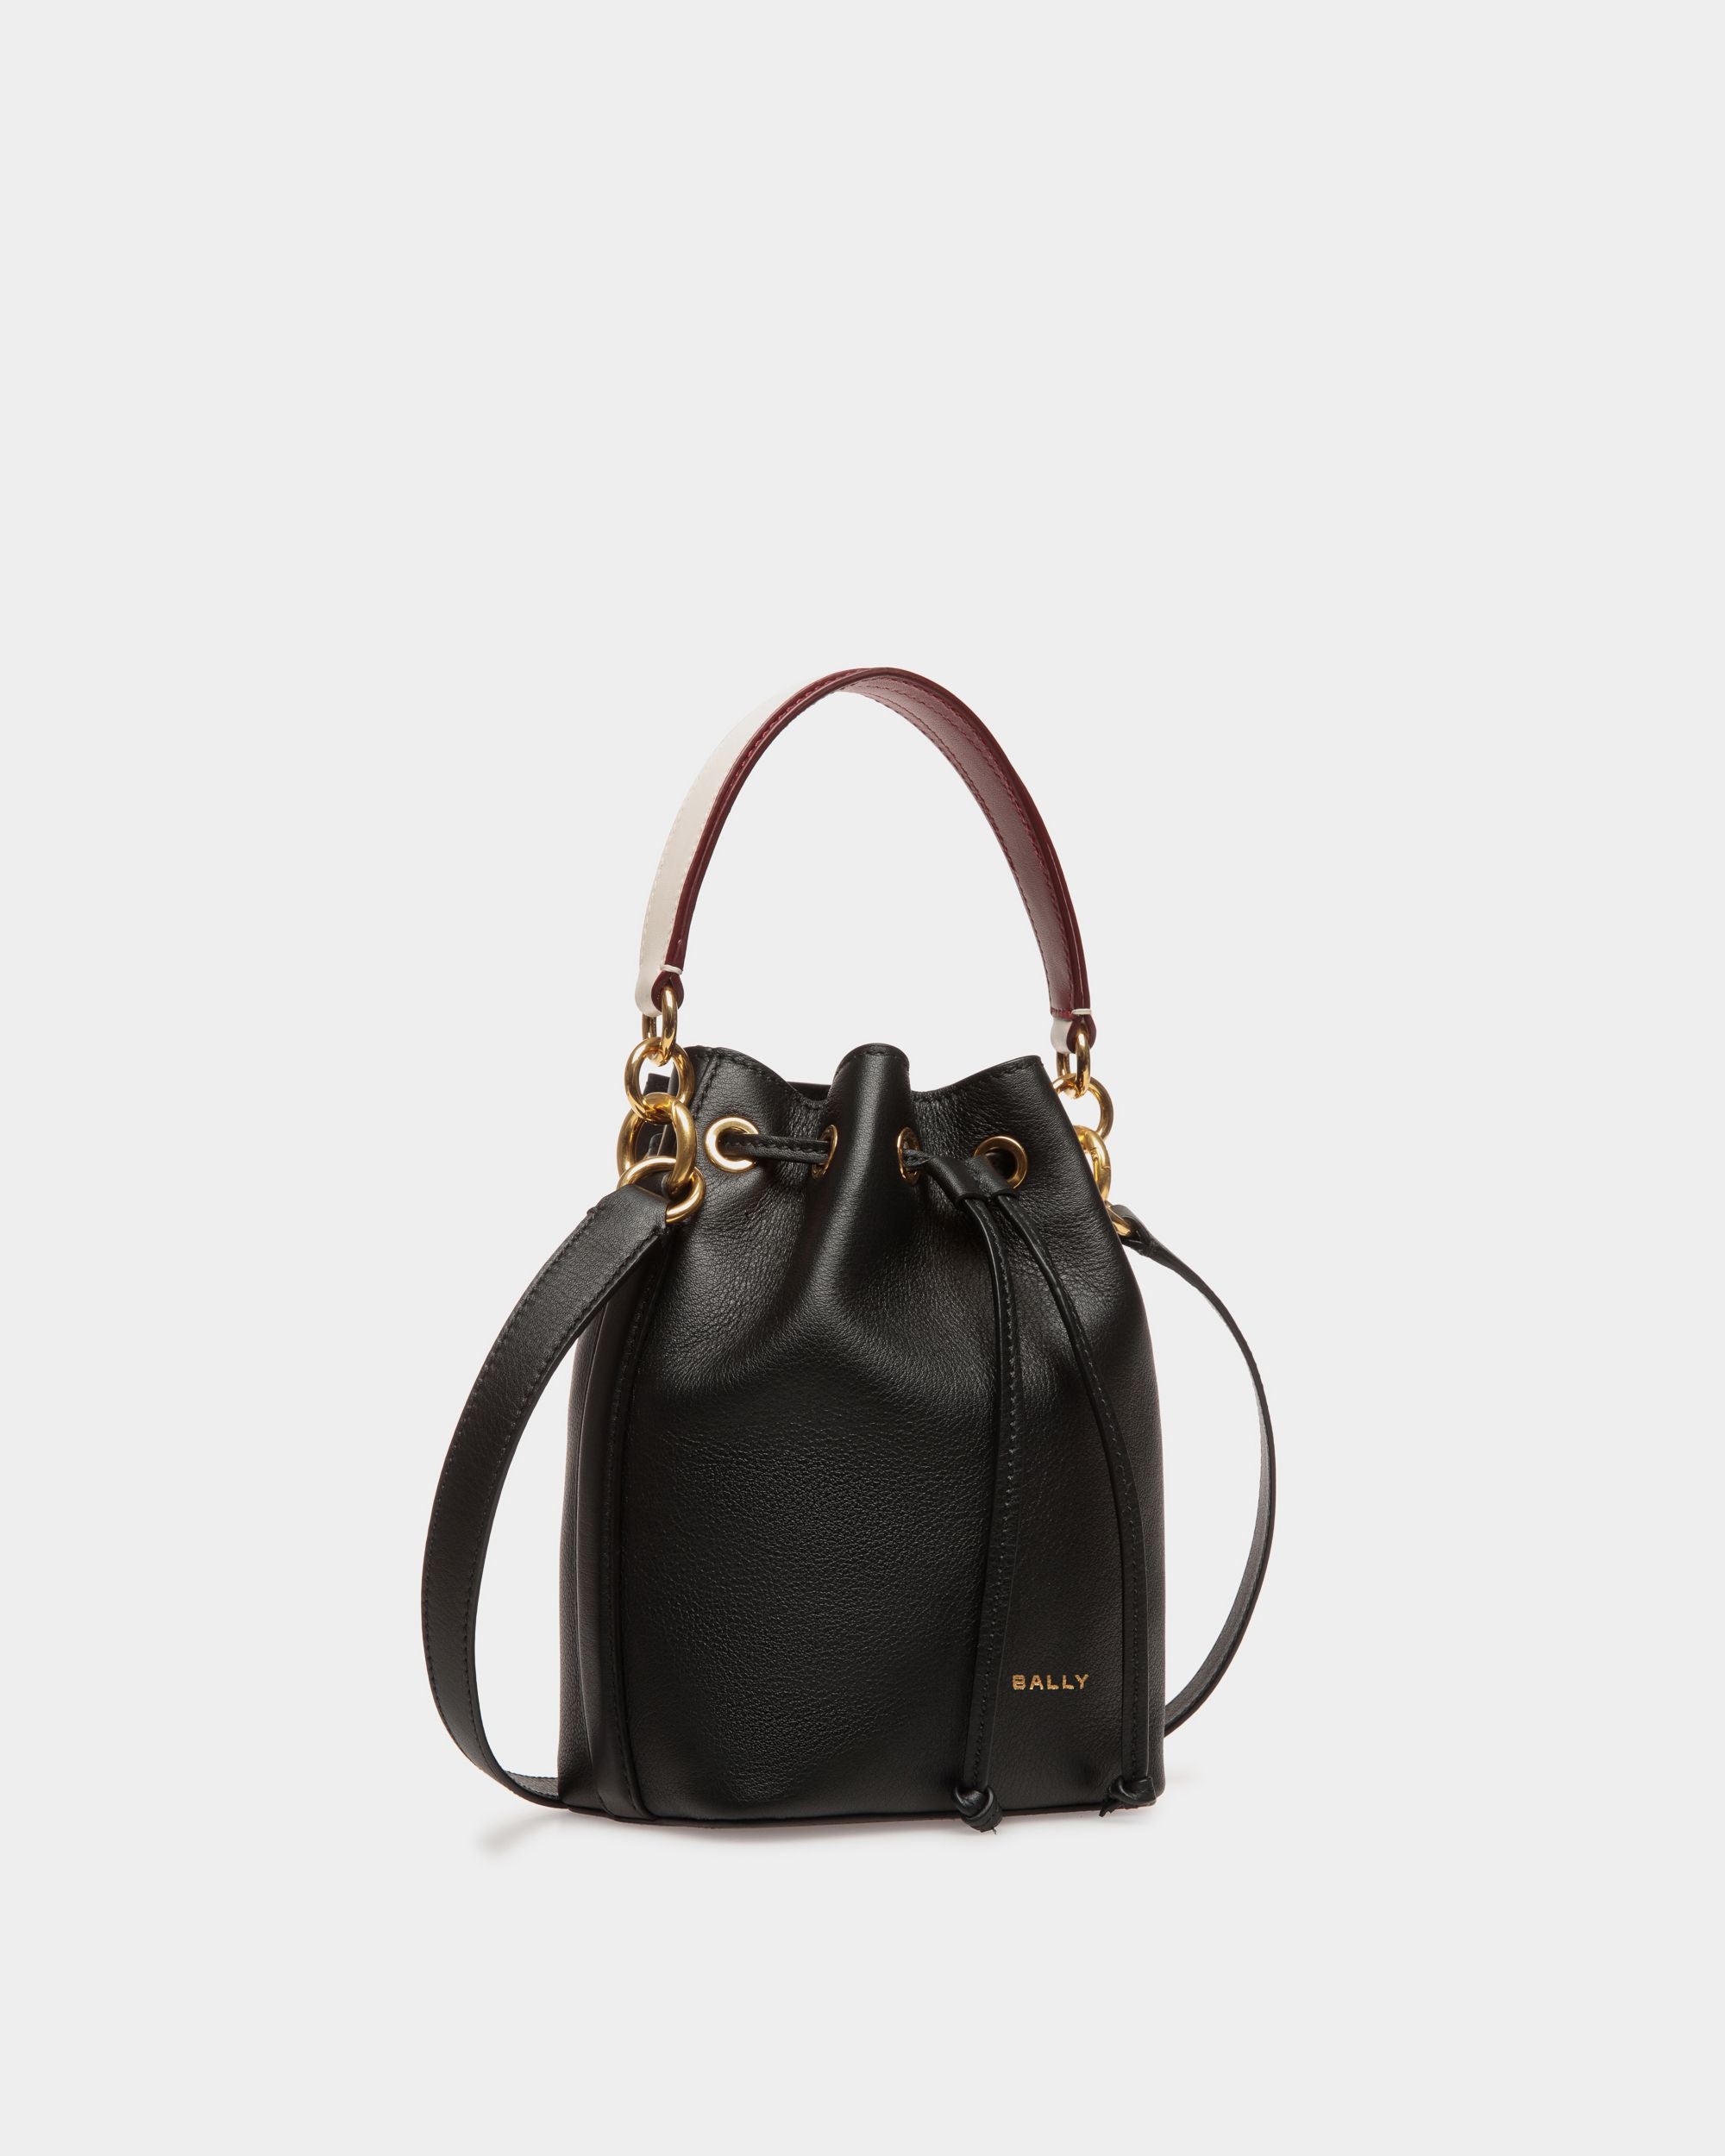 Code | Women's Mini Bucket Bag in Black Leather | Bally | Still Life 3/4 Front